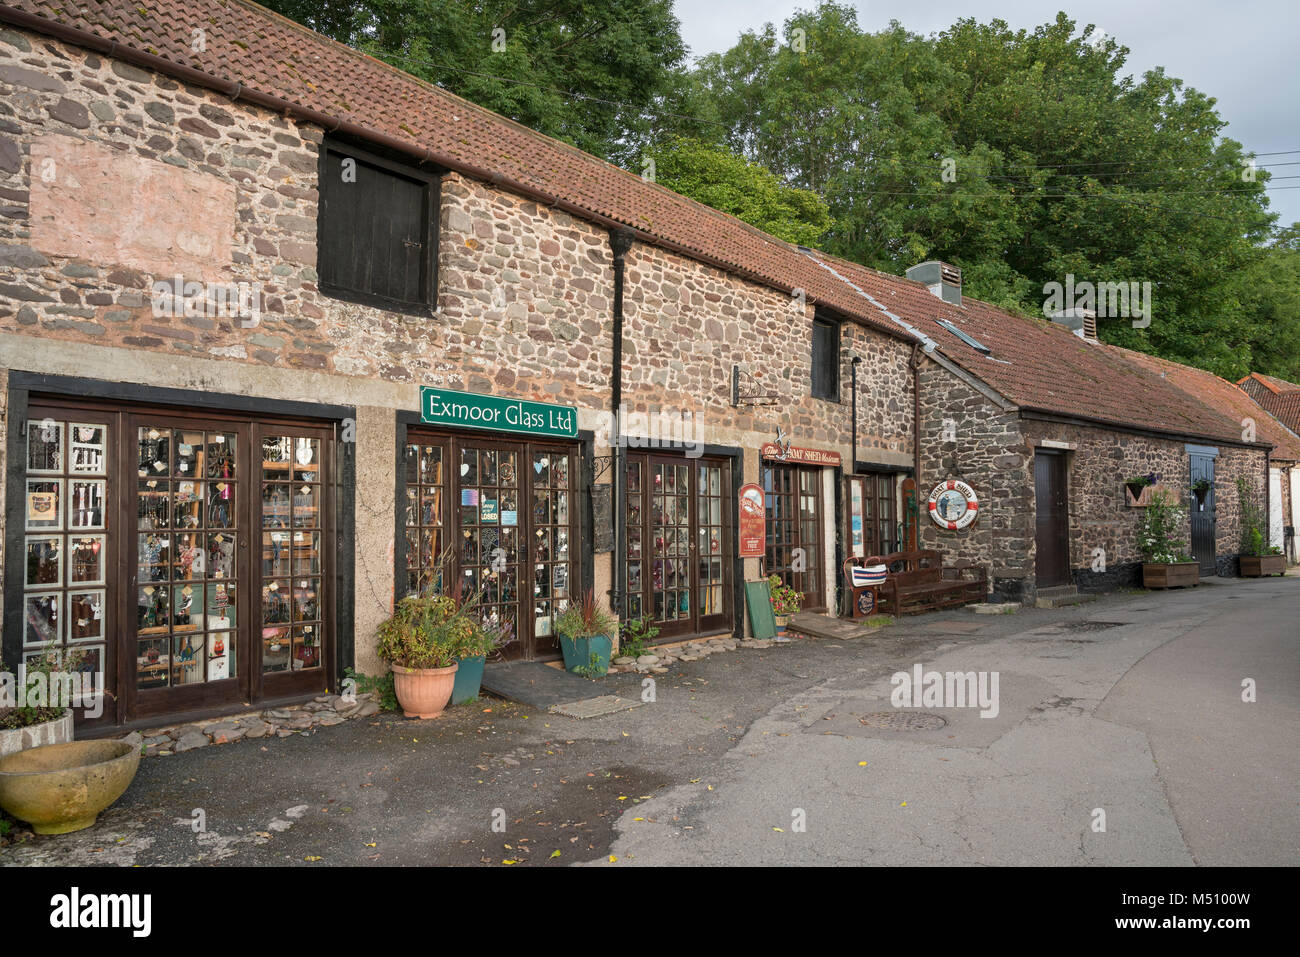 The Exmoor Glass Ltd showroom at Porlock Weir in Somerset, England. Stock Photo